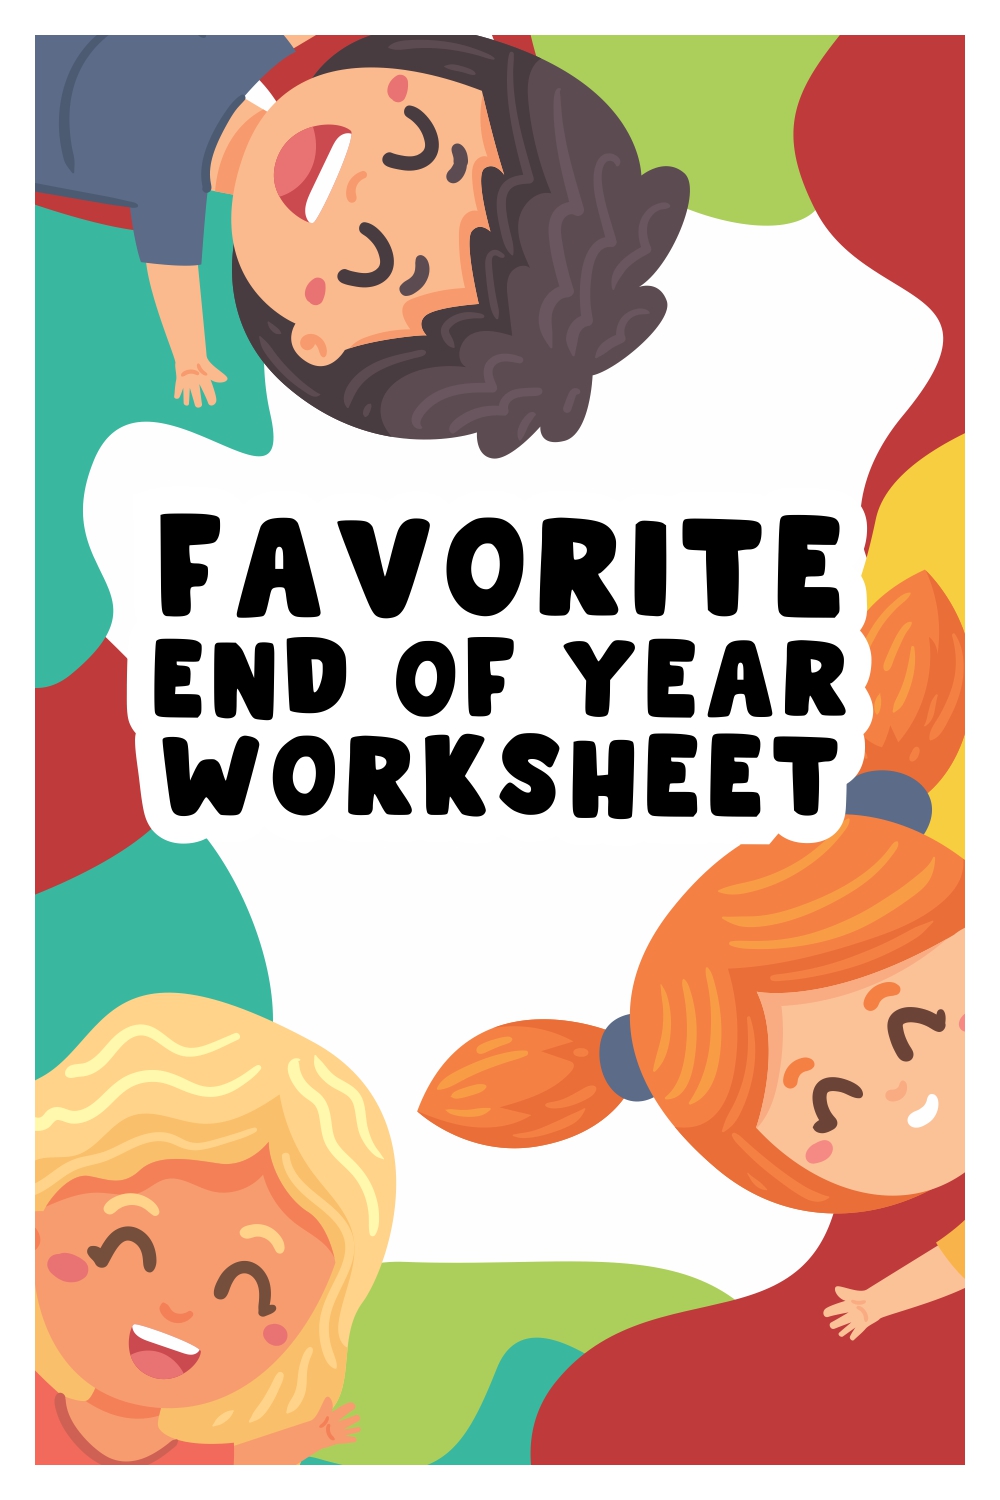 16 Images of Favorite End Of Year Worksheet